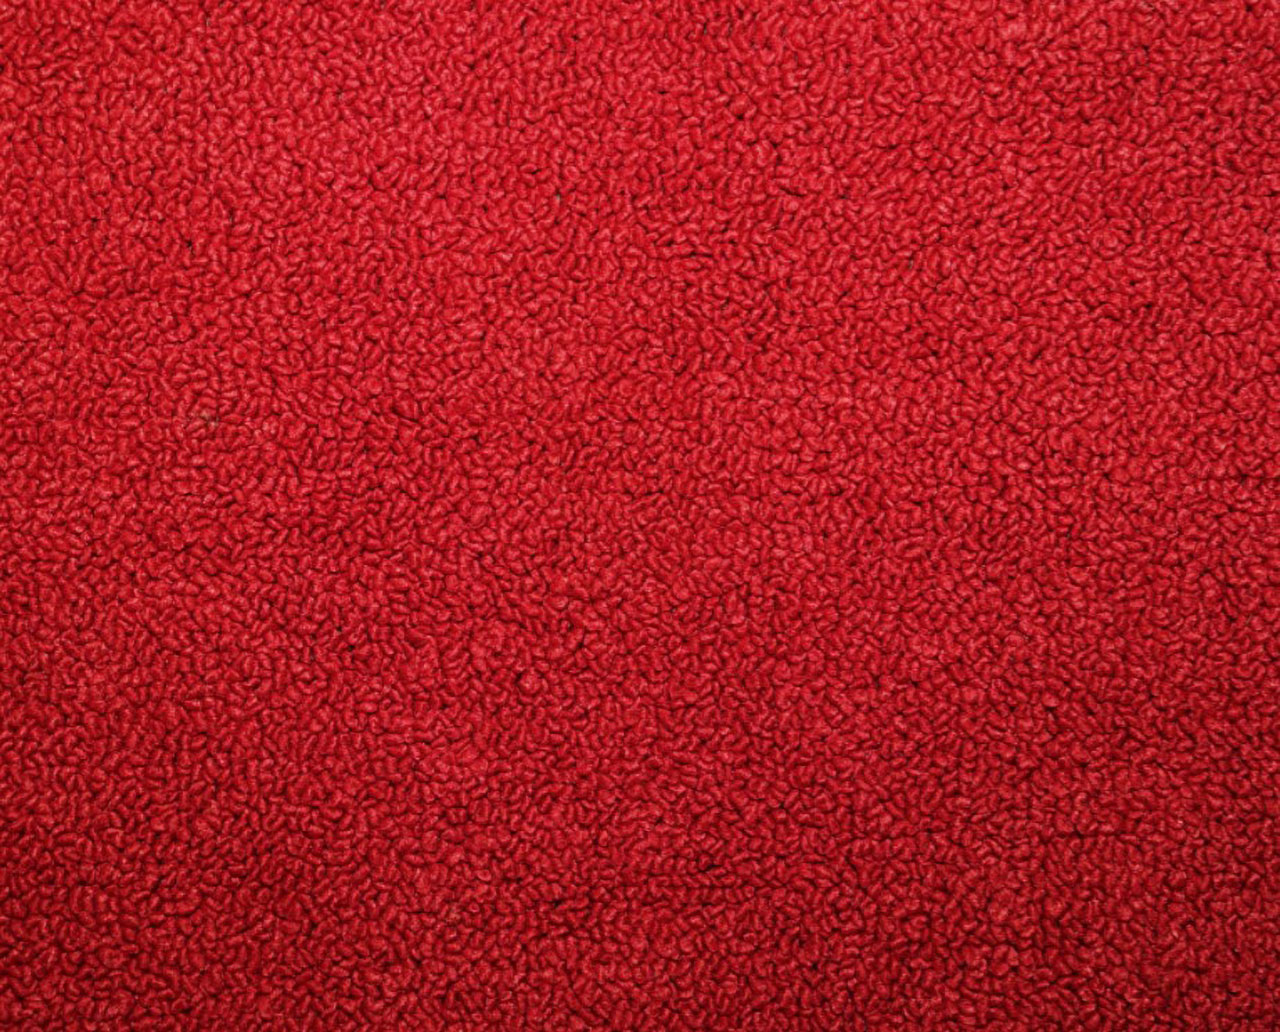 Holden Standard HR Standard Wagon E49 Mephisto Red Carpet (Image 1 of 1)